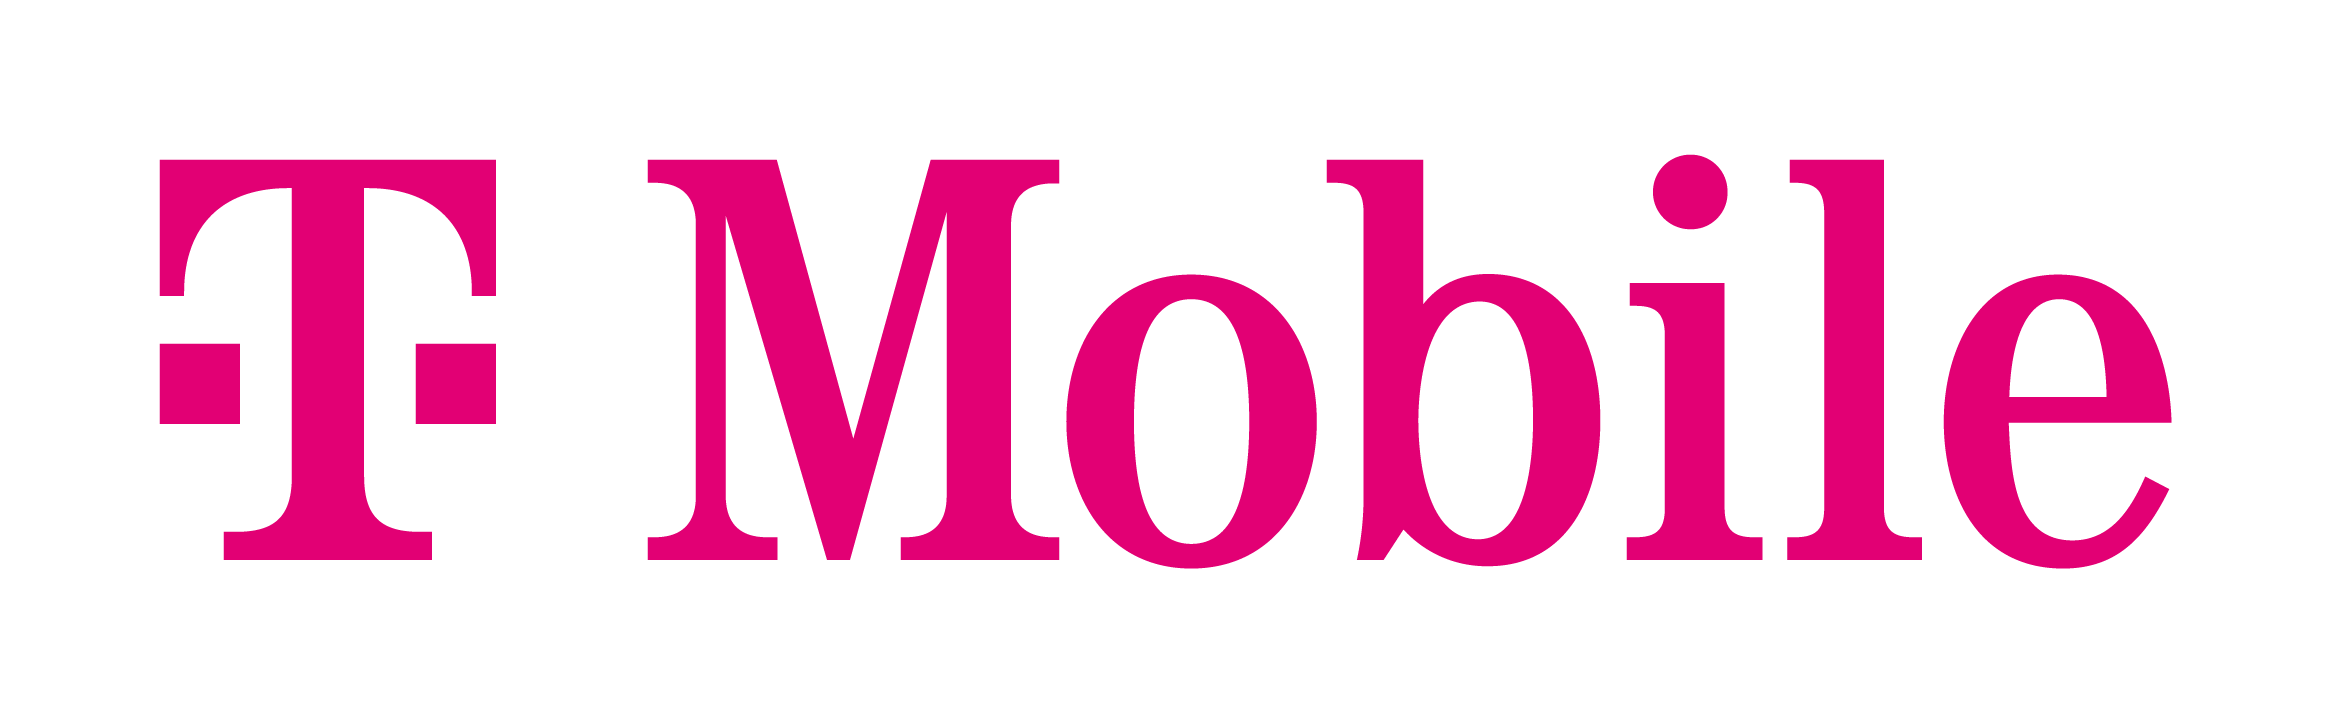 T-Mobile company logo